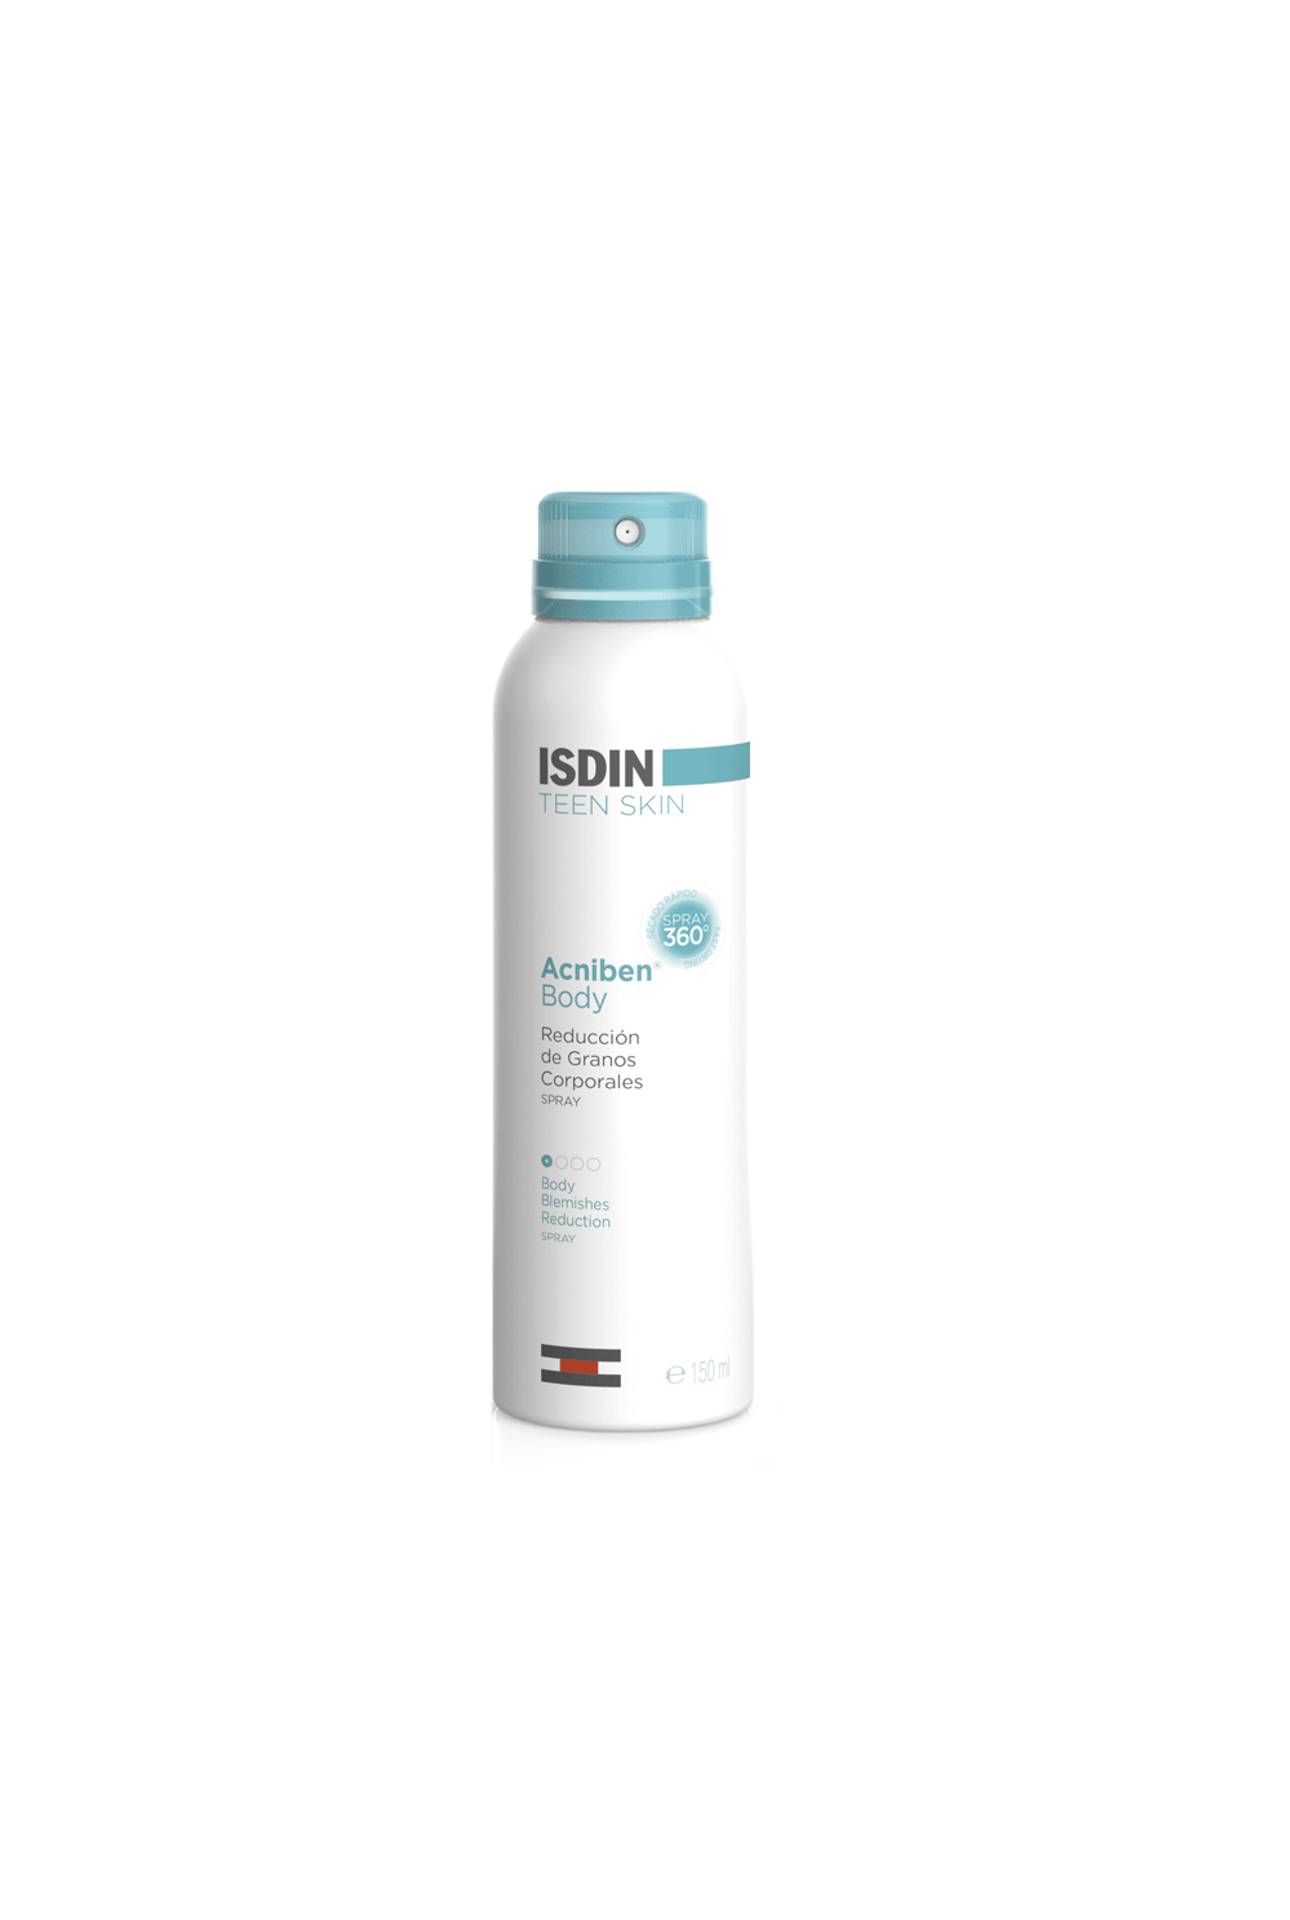 Isdin-Acniben-Teen-Skin-Spray-x-150-ml-8470001806475